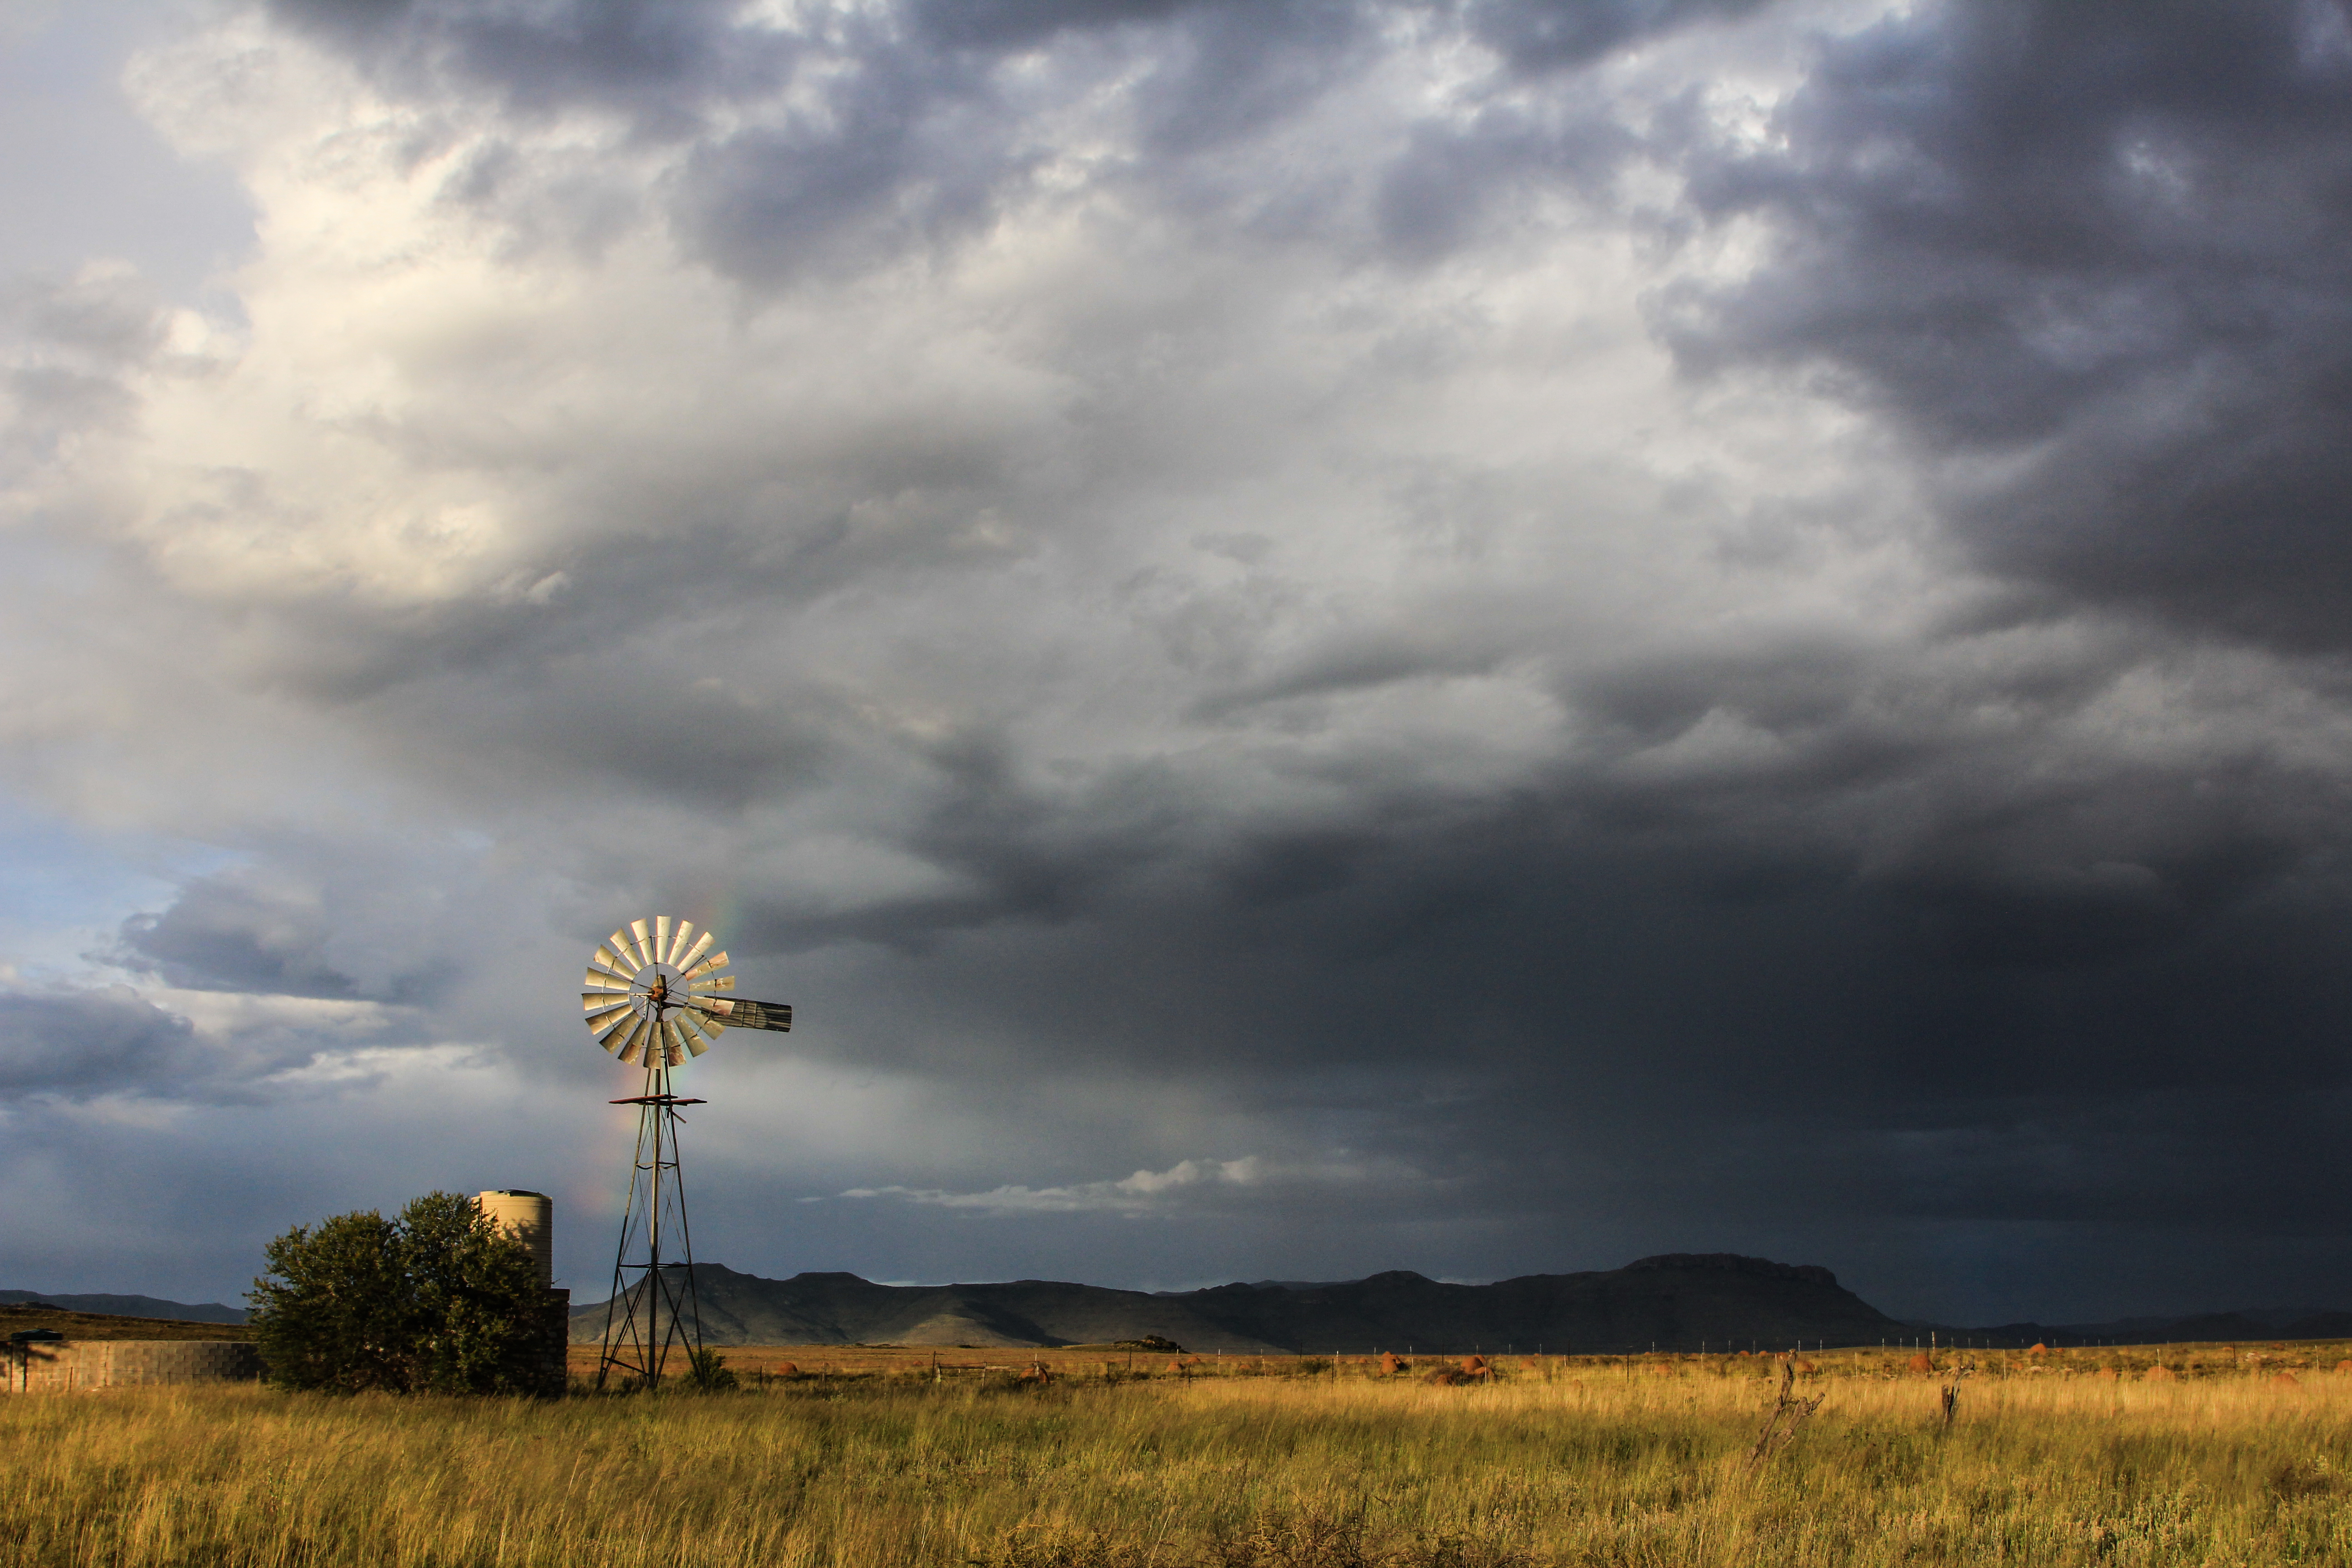 Windpump landscape on Hillston Farm, Middelburg, Eastern Cape Karoo. Image: Chris Marais